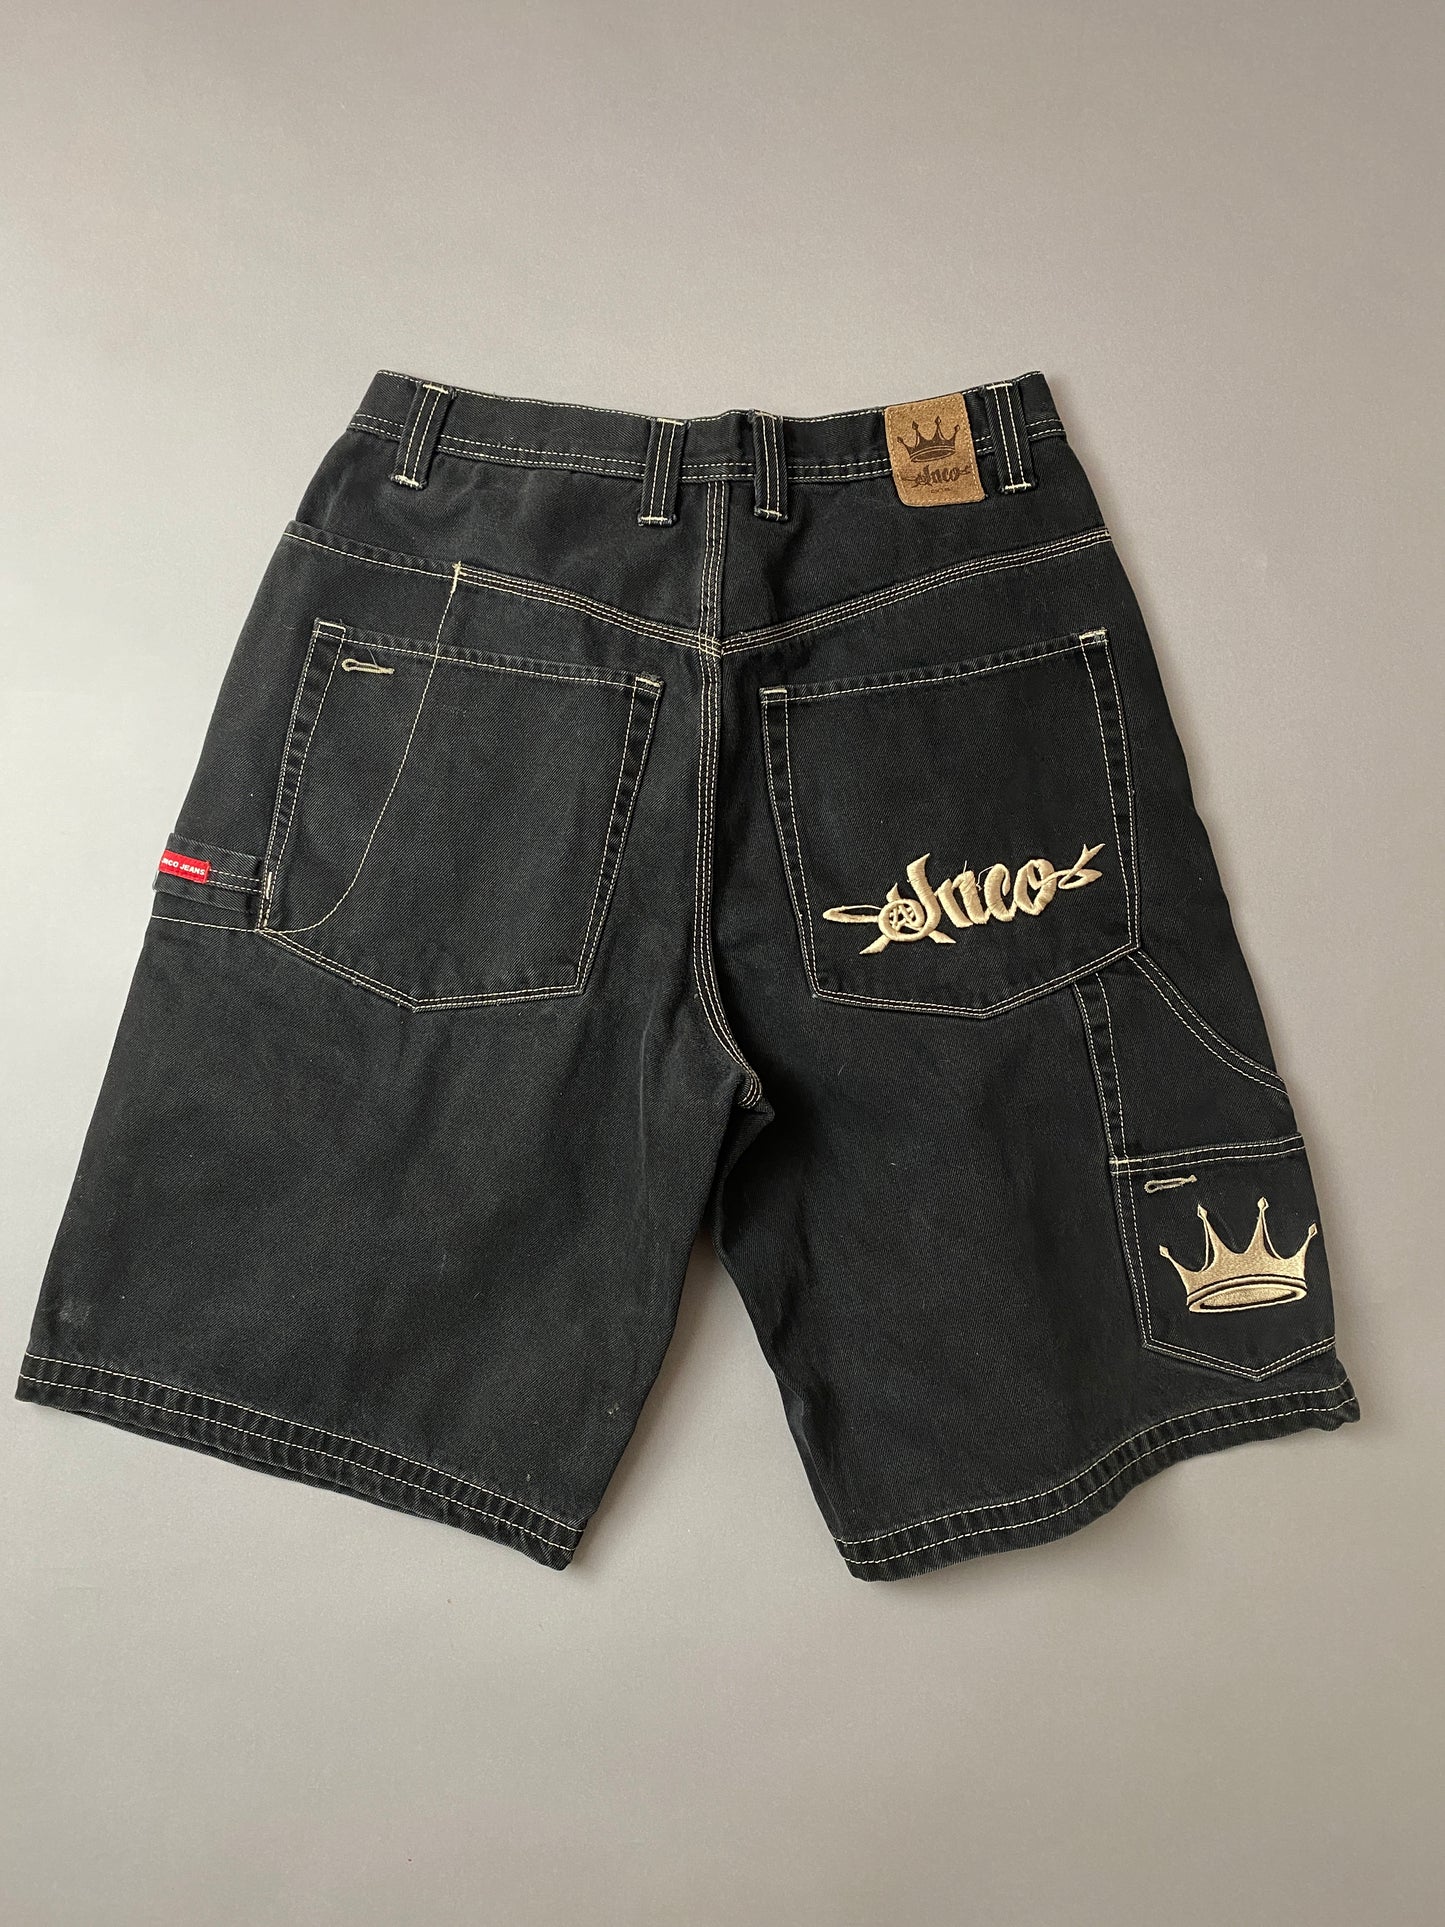 JNCO Vintage Shorts - 34